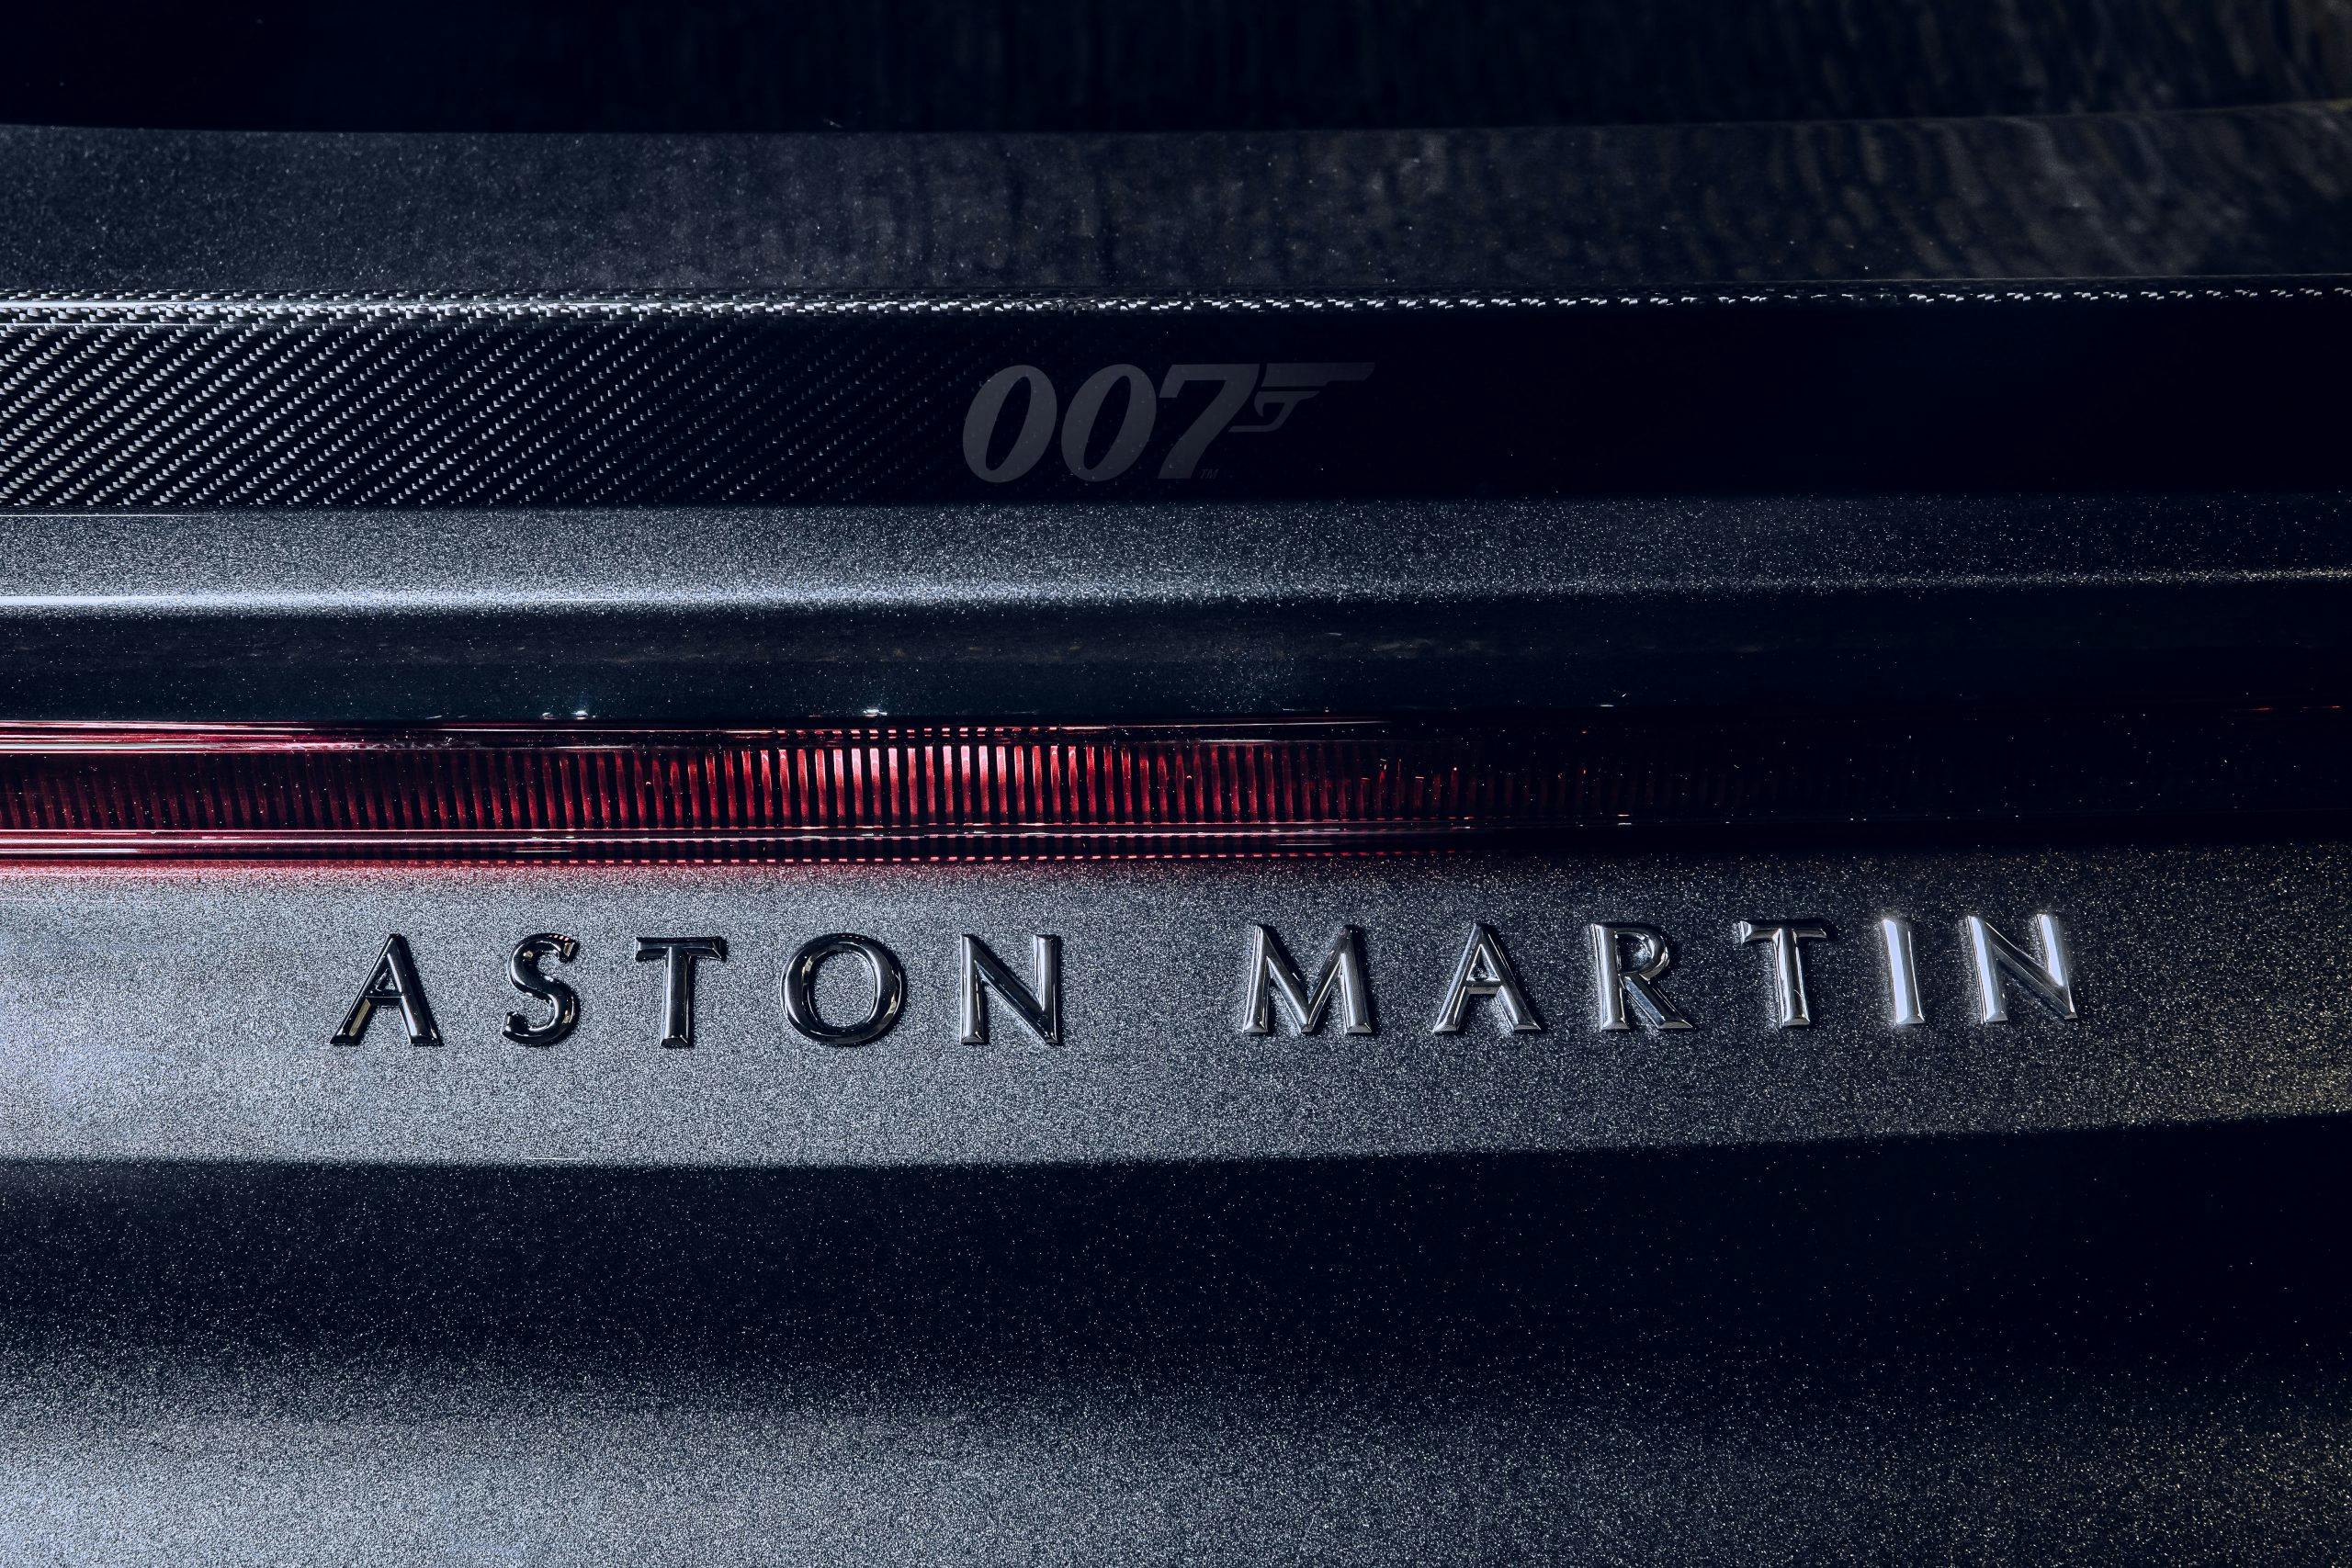 Aston Martin Vantage 007 Edition badging